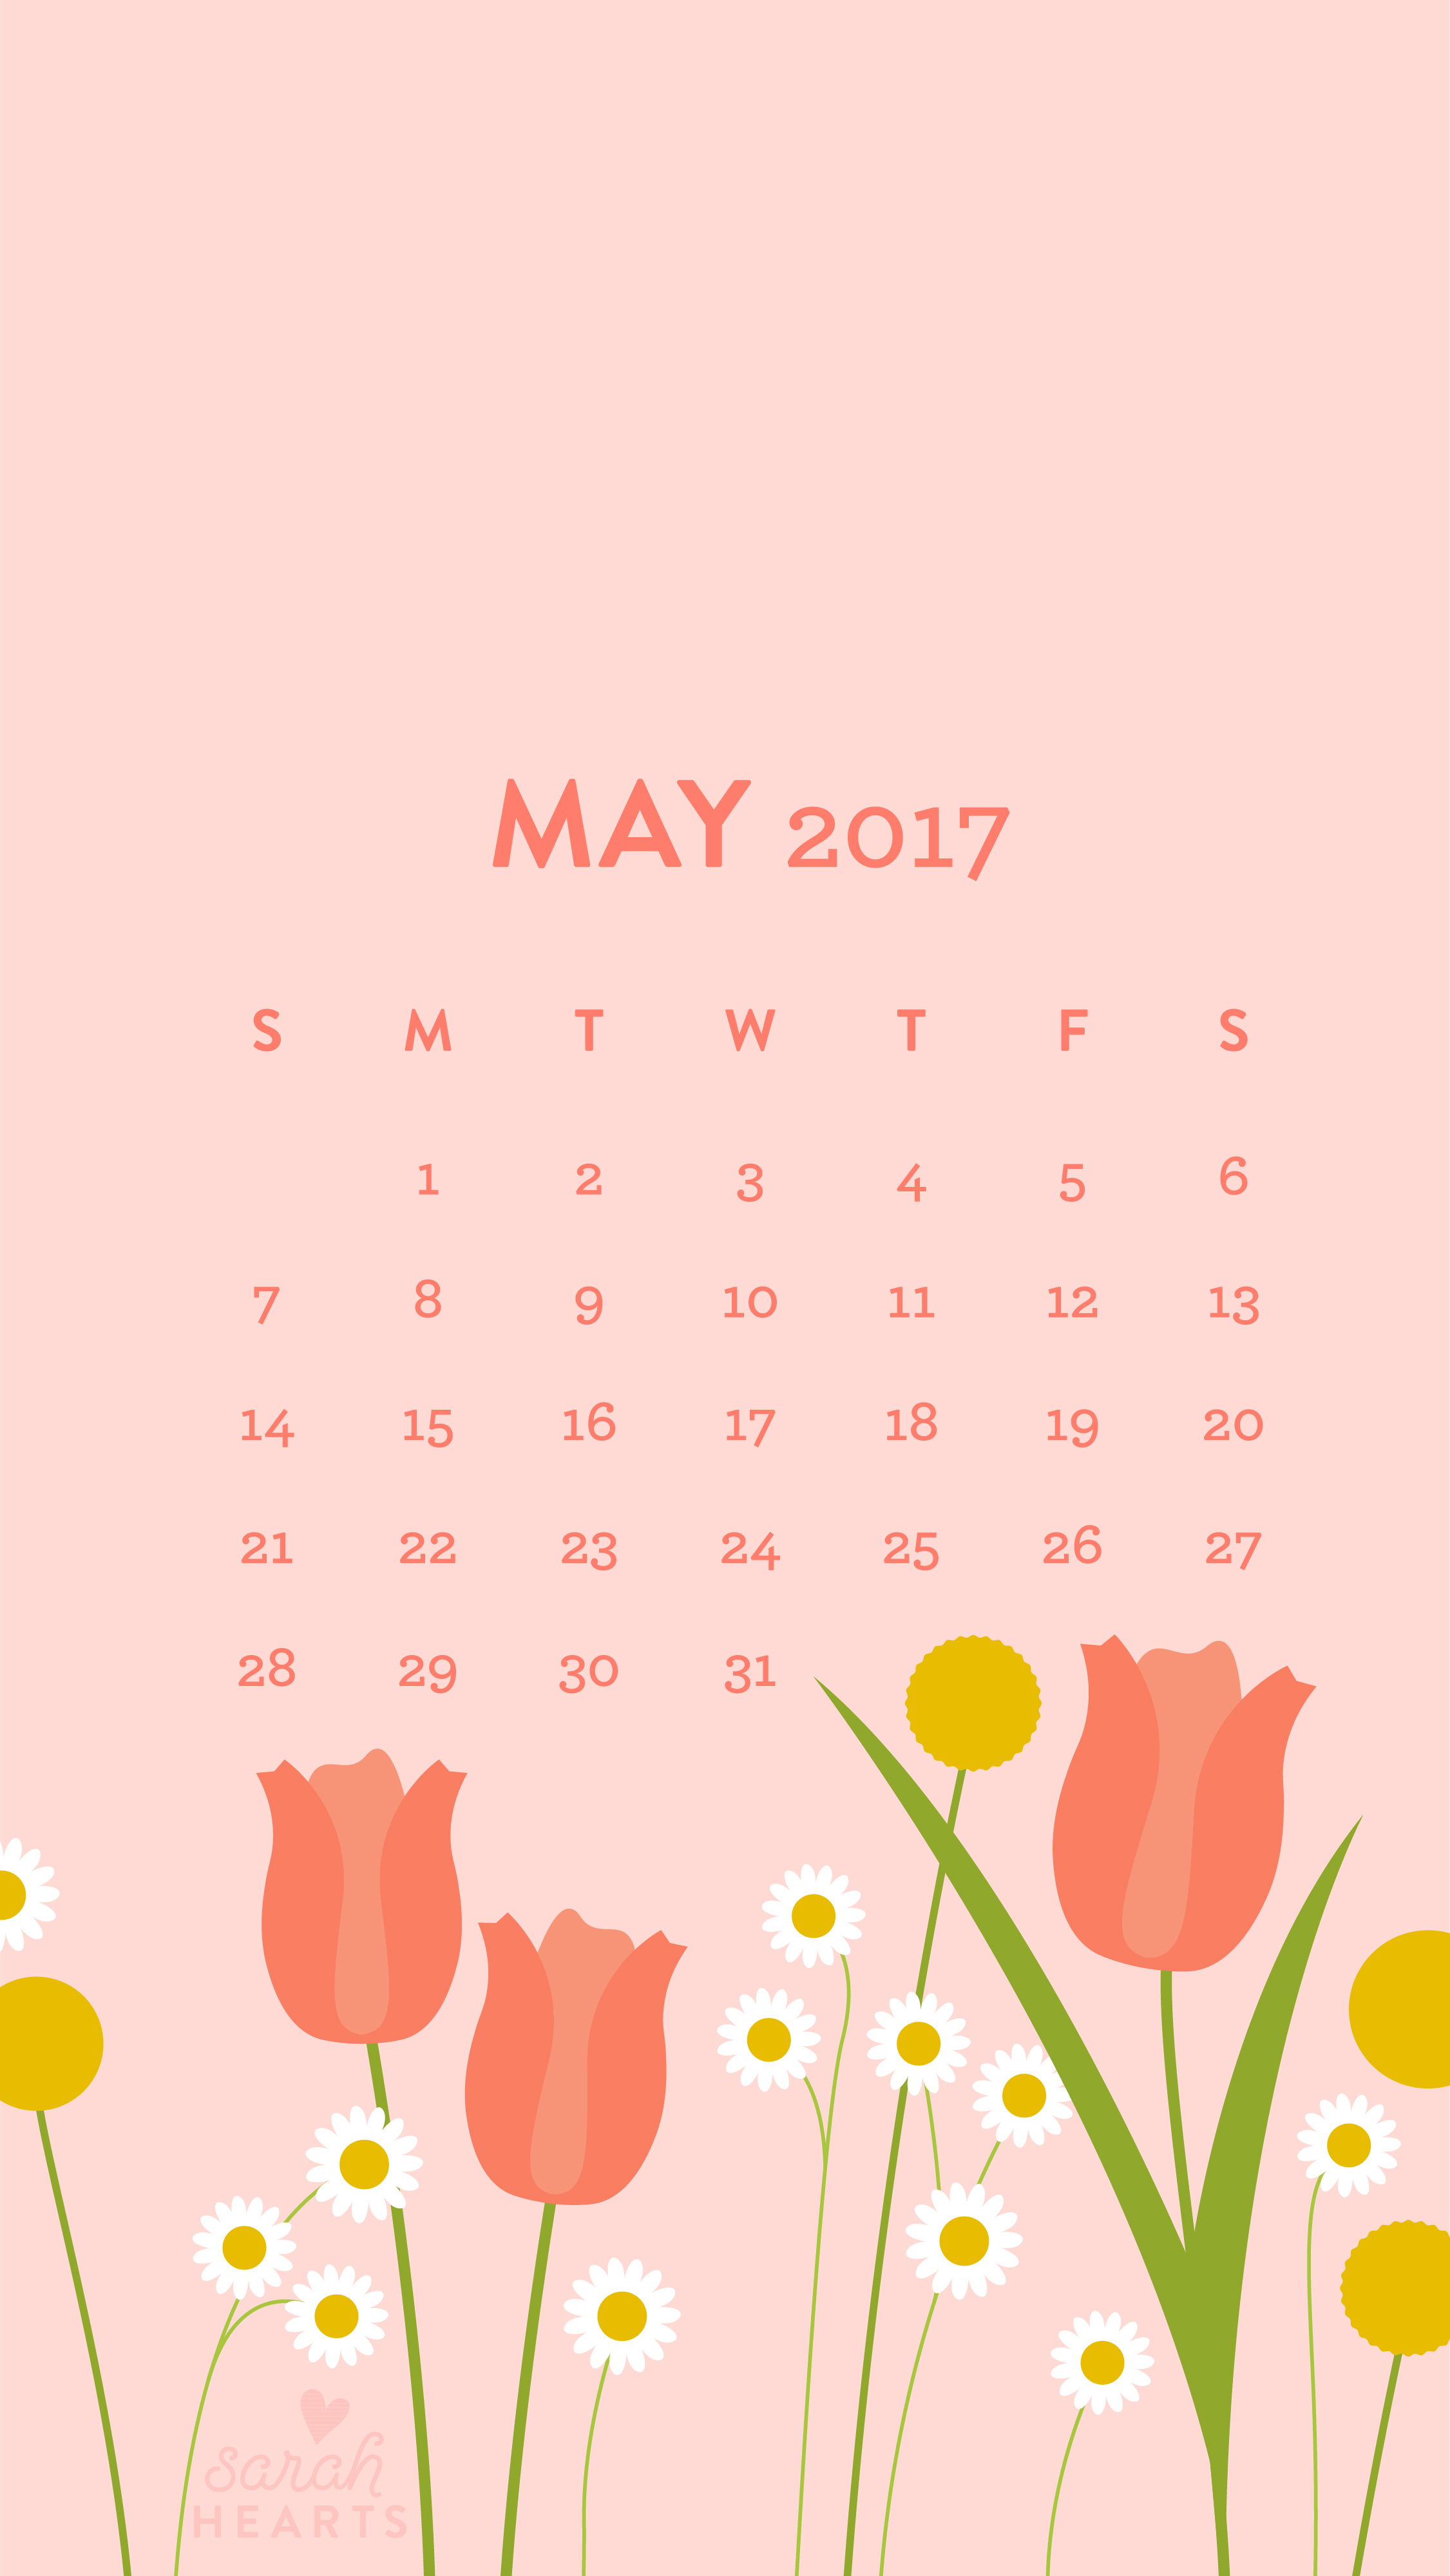 May 2017 Calendar Wallpaper Sarah Hearts Images, Photos, Reviews